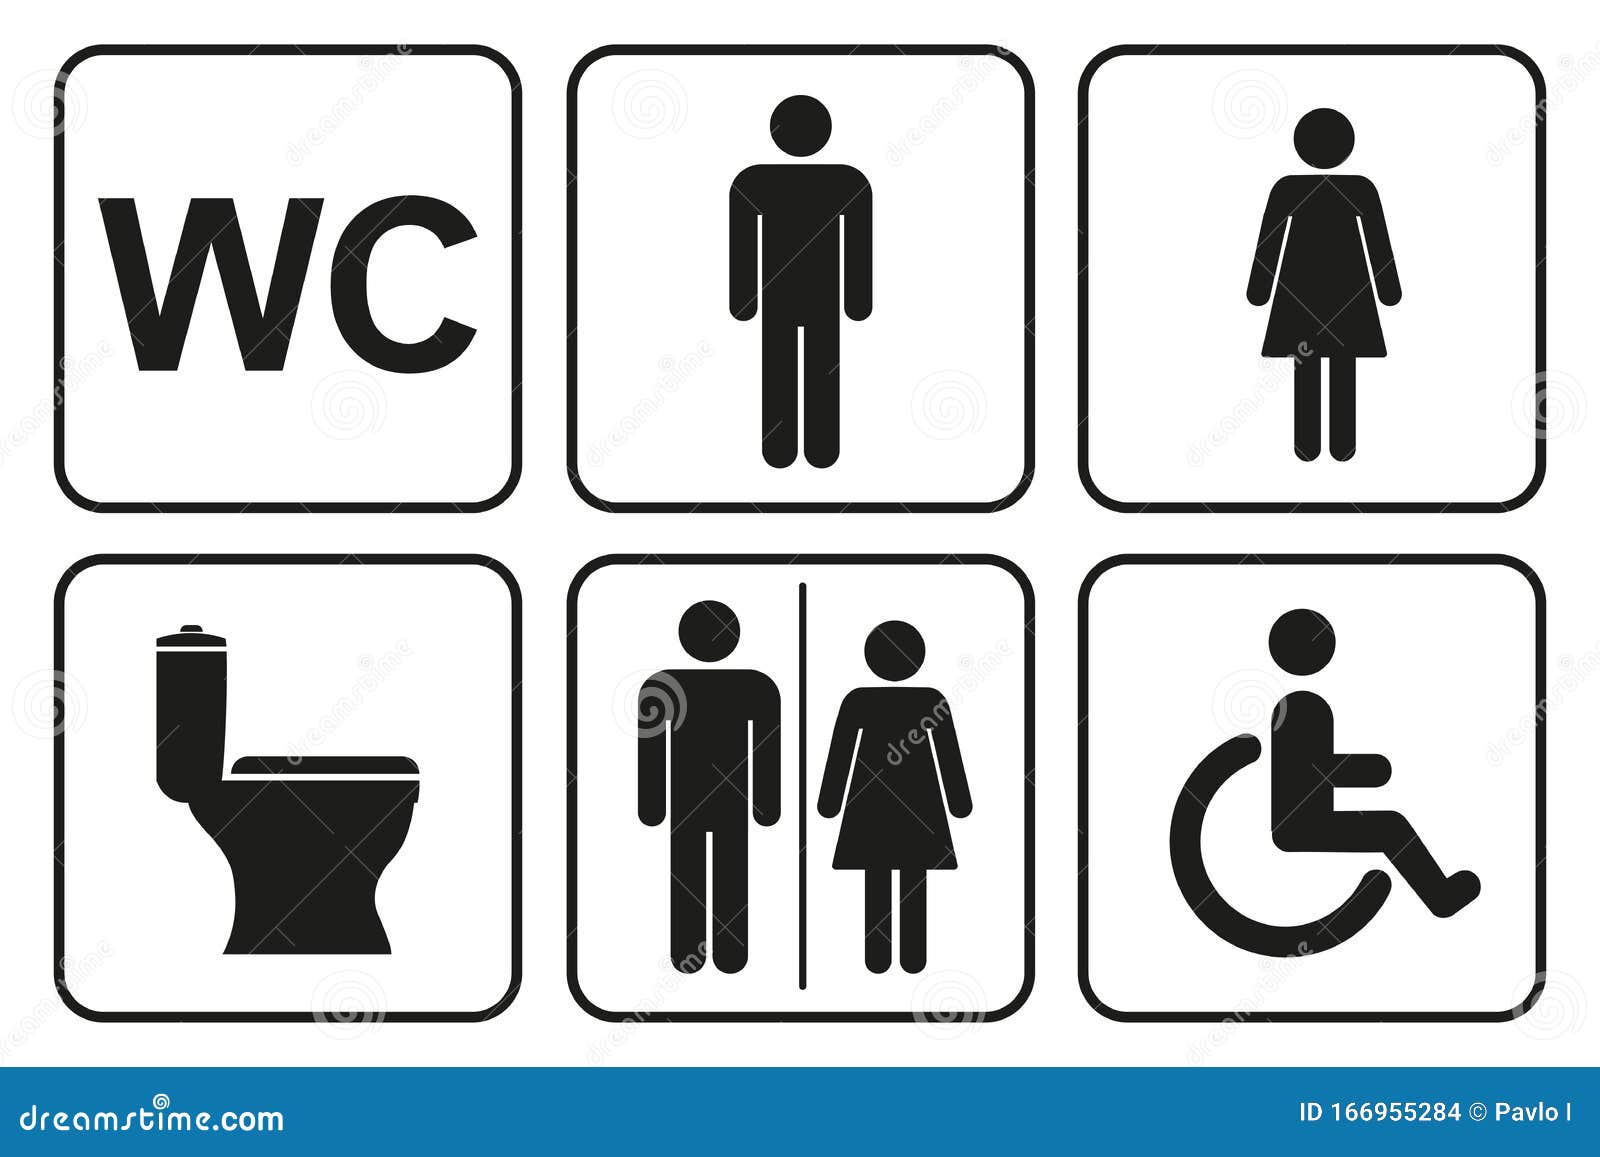 toilet icons set, toilet signs, wc signs Ã¢â¬â 